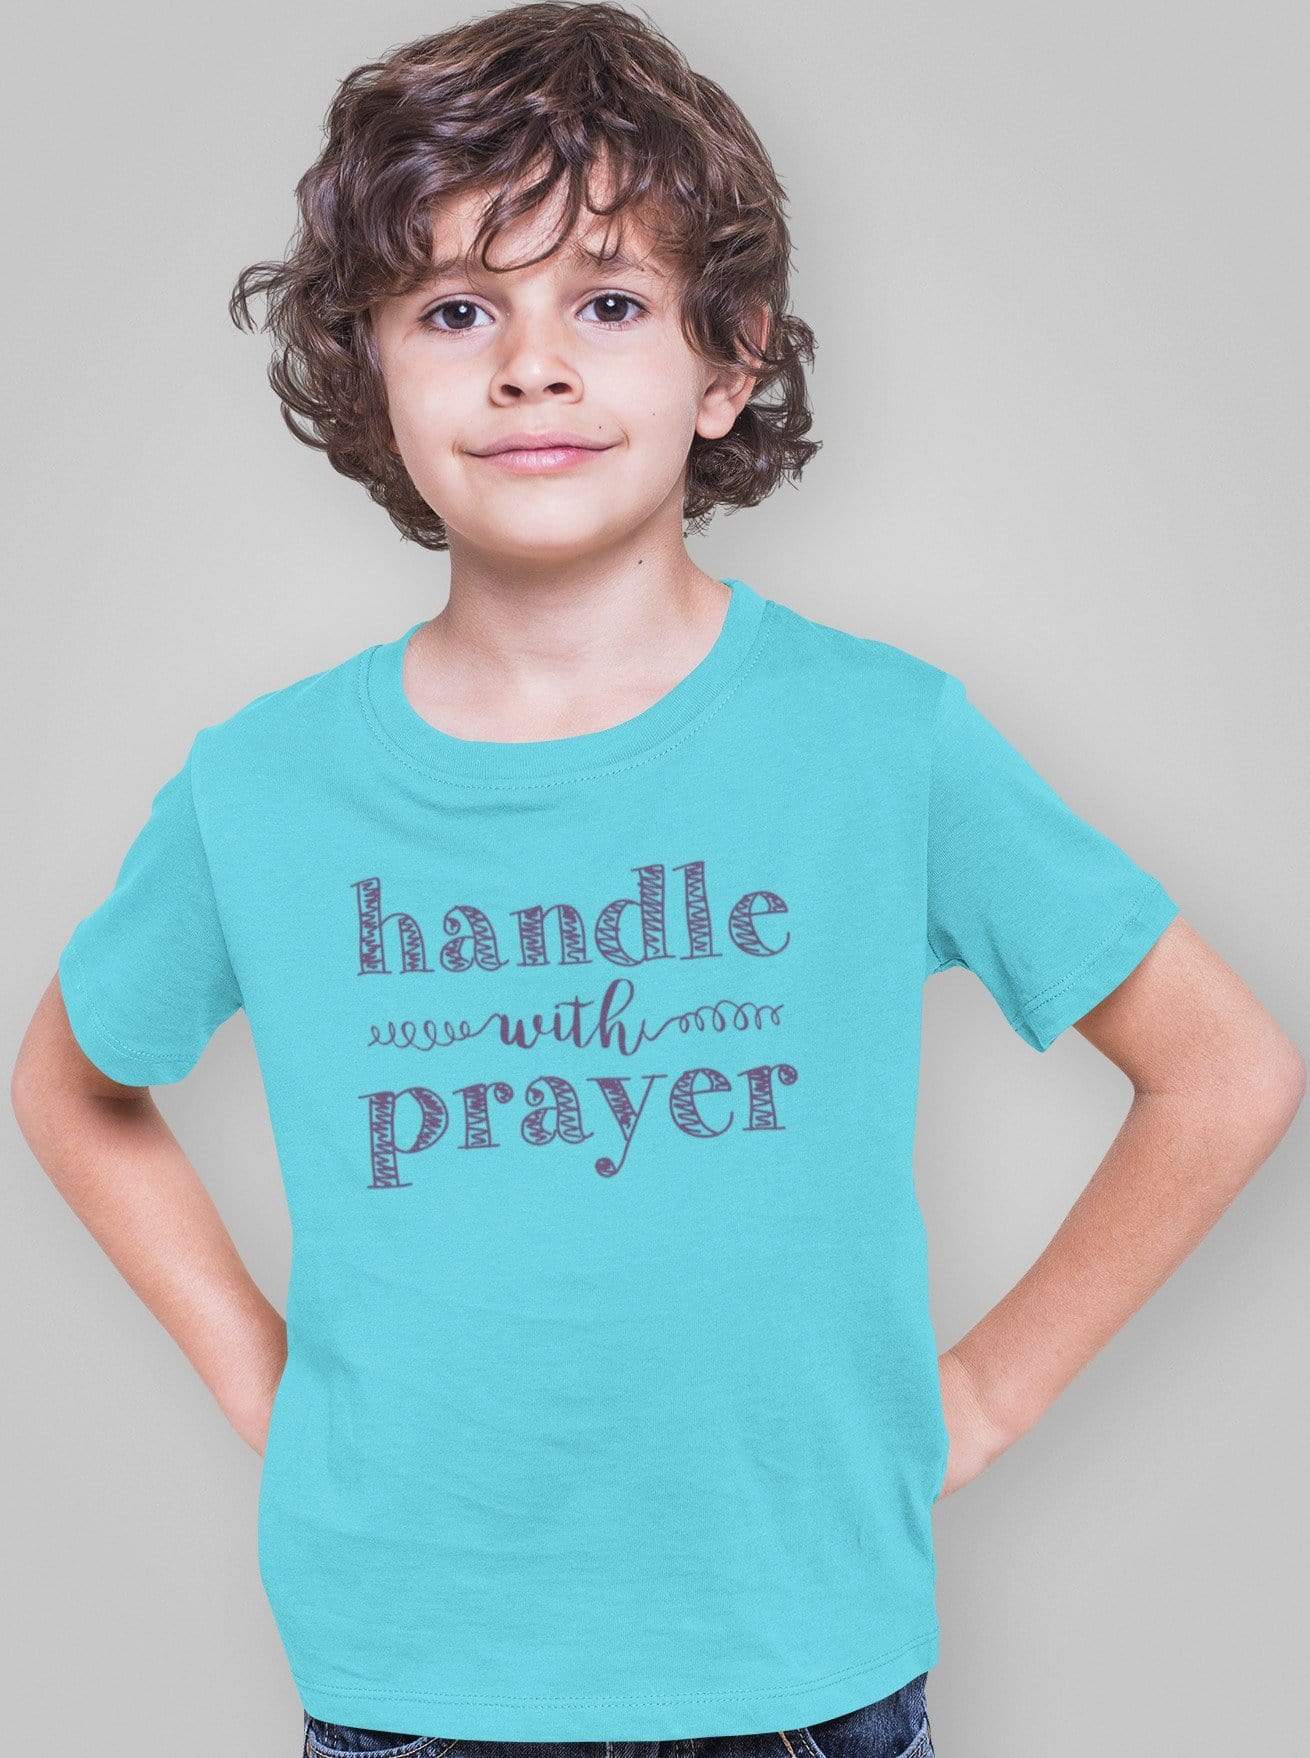 Living Words Boy Round neck Tshirt 0-11M / Sky Blue Handle with prayer